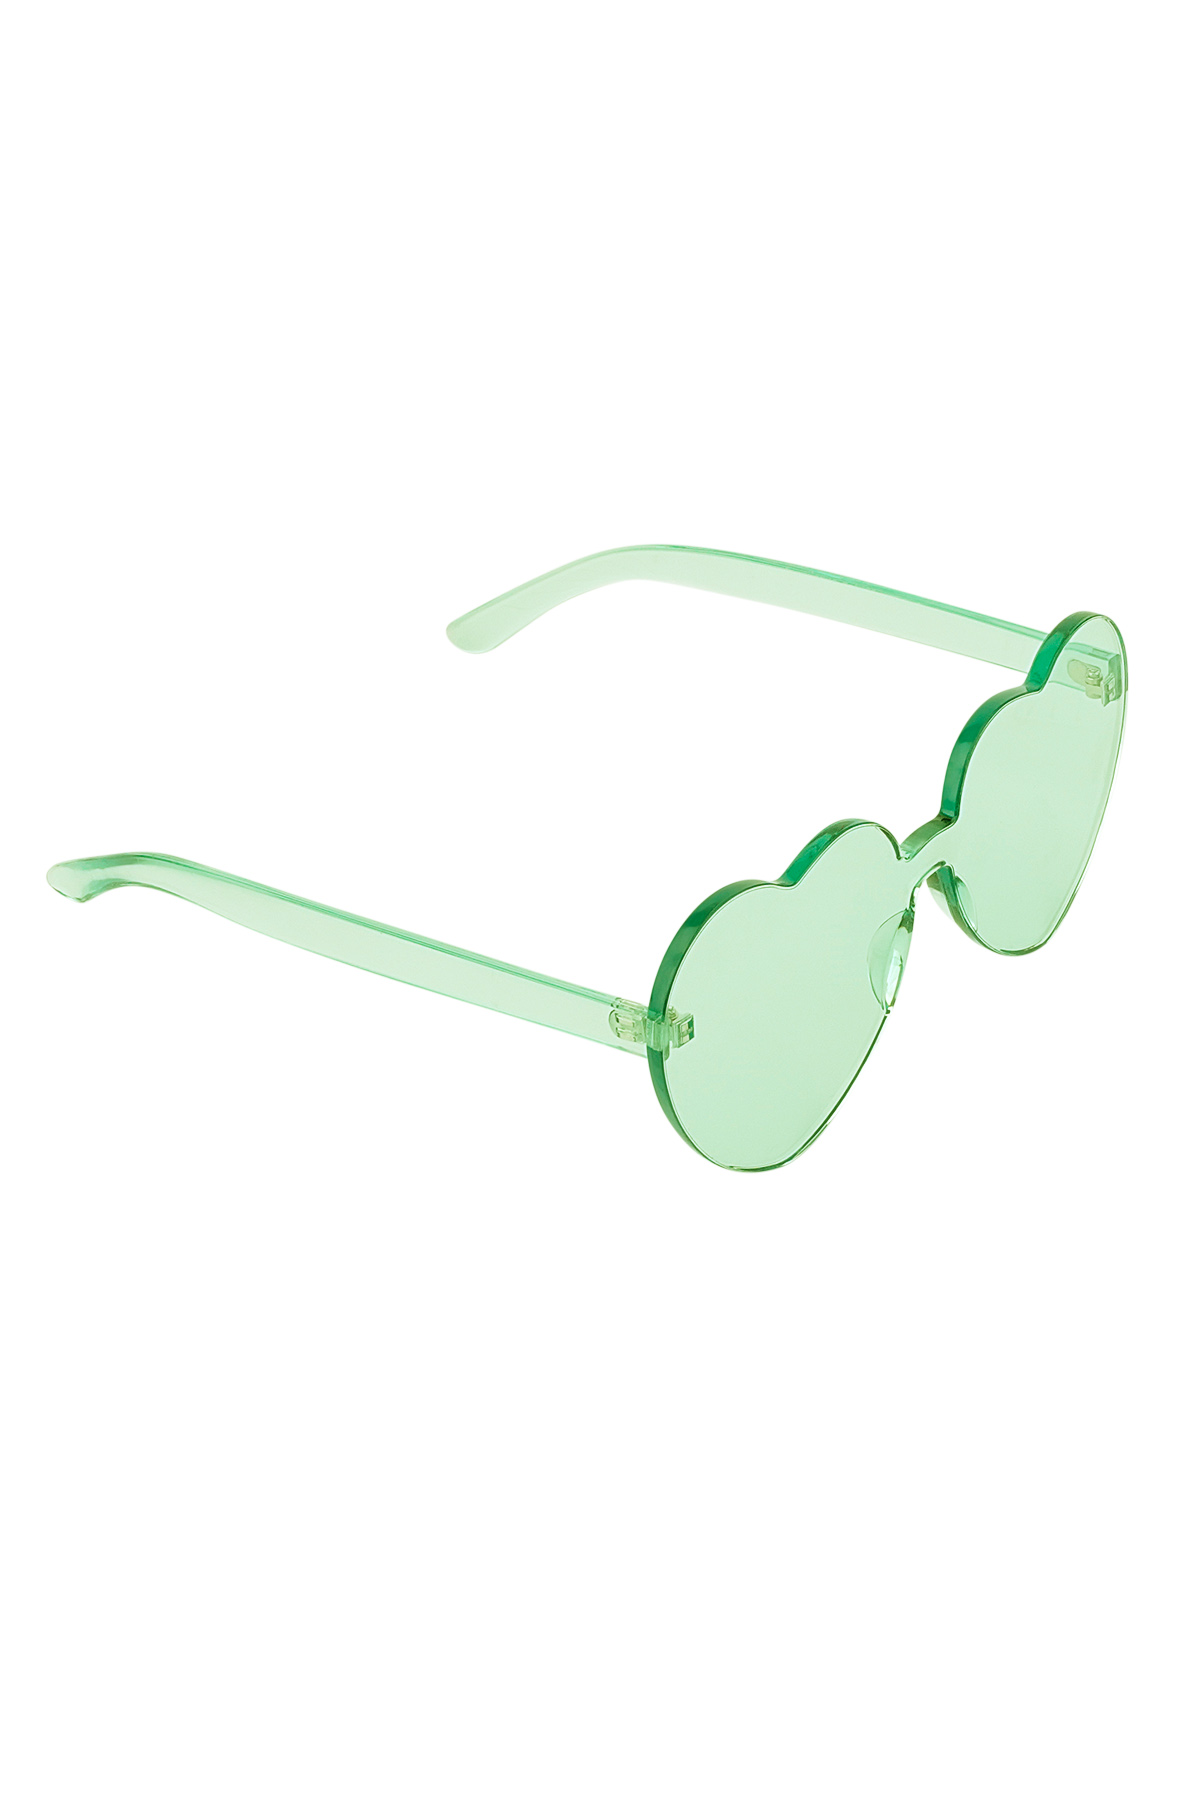 Sunglasses simple heart - green